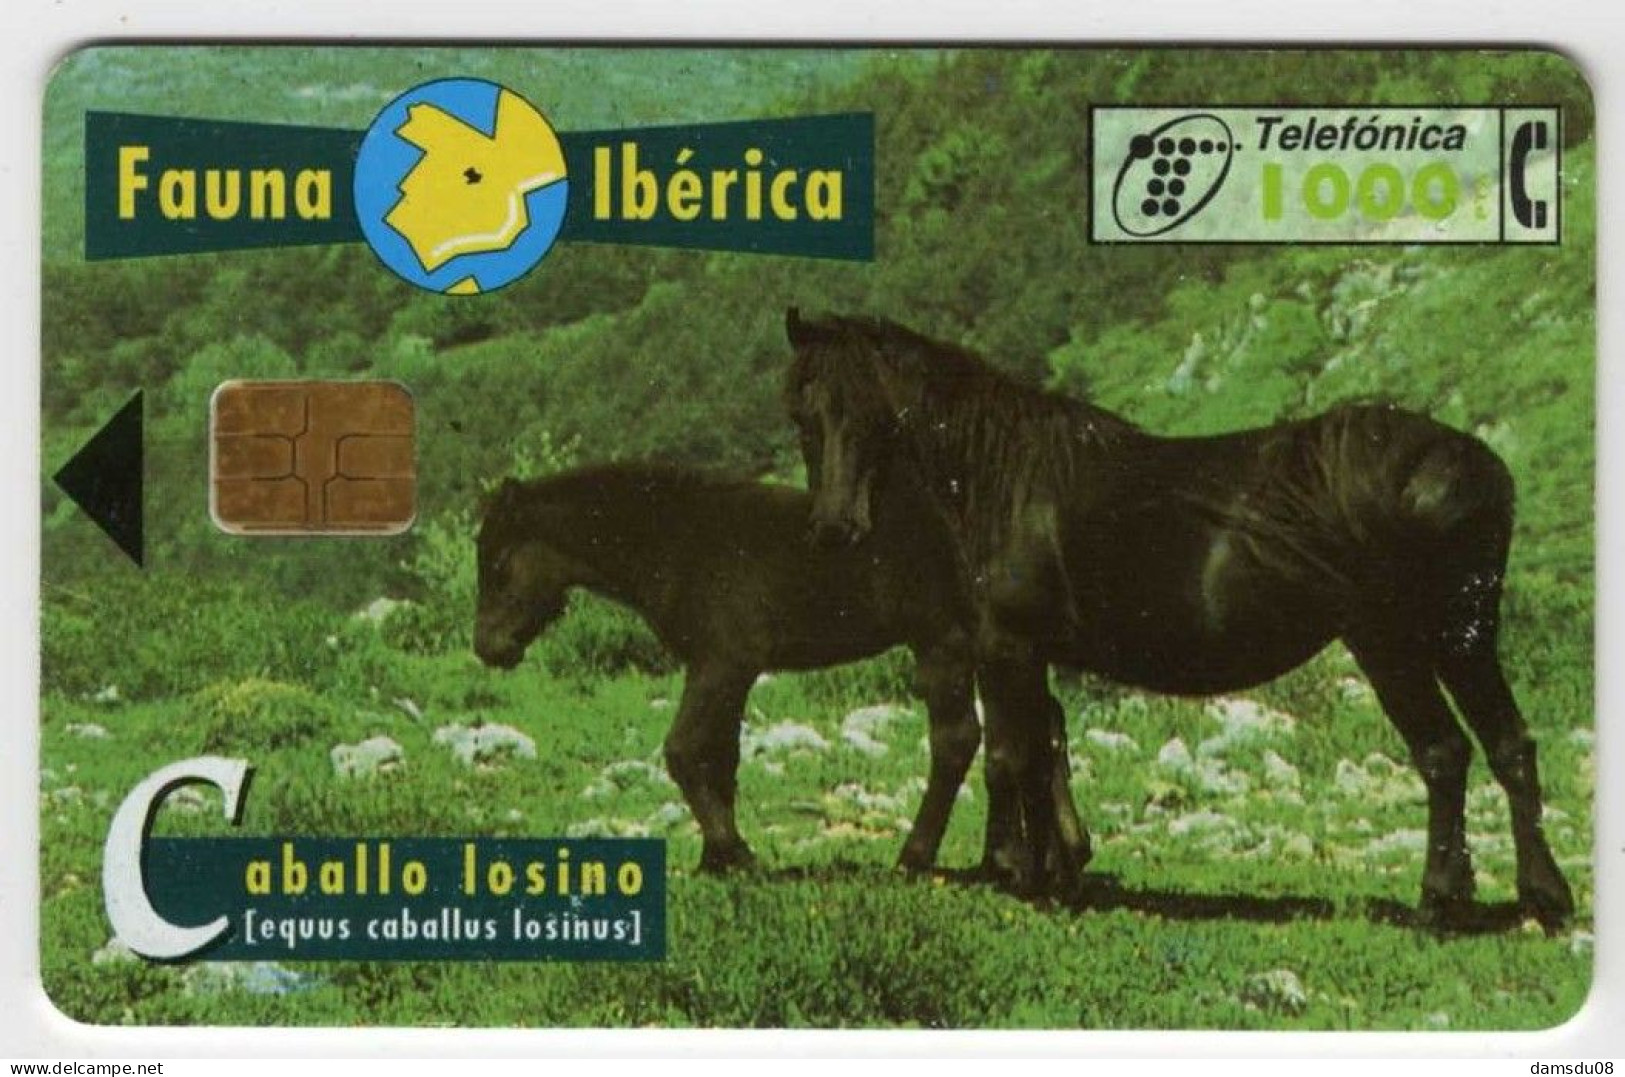 Espagne 1000 PTA Fauna Iberica Caballo Losino 01/97 1.000.000 Exemplaires Vide Cheval - Emissions Basiques